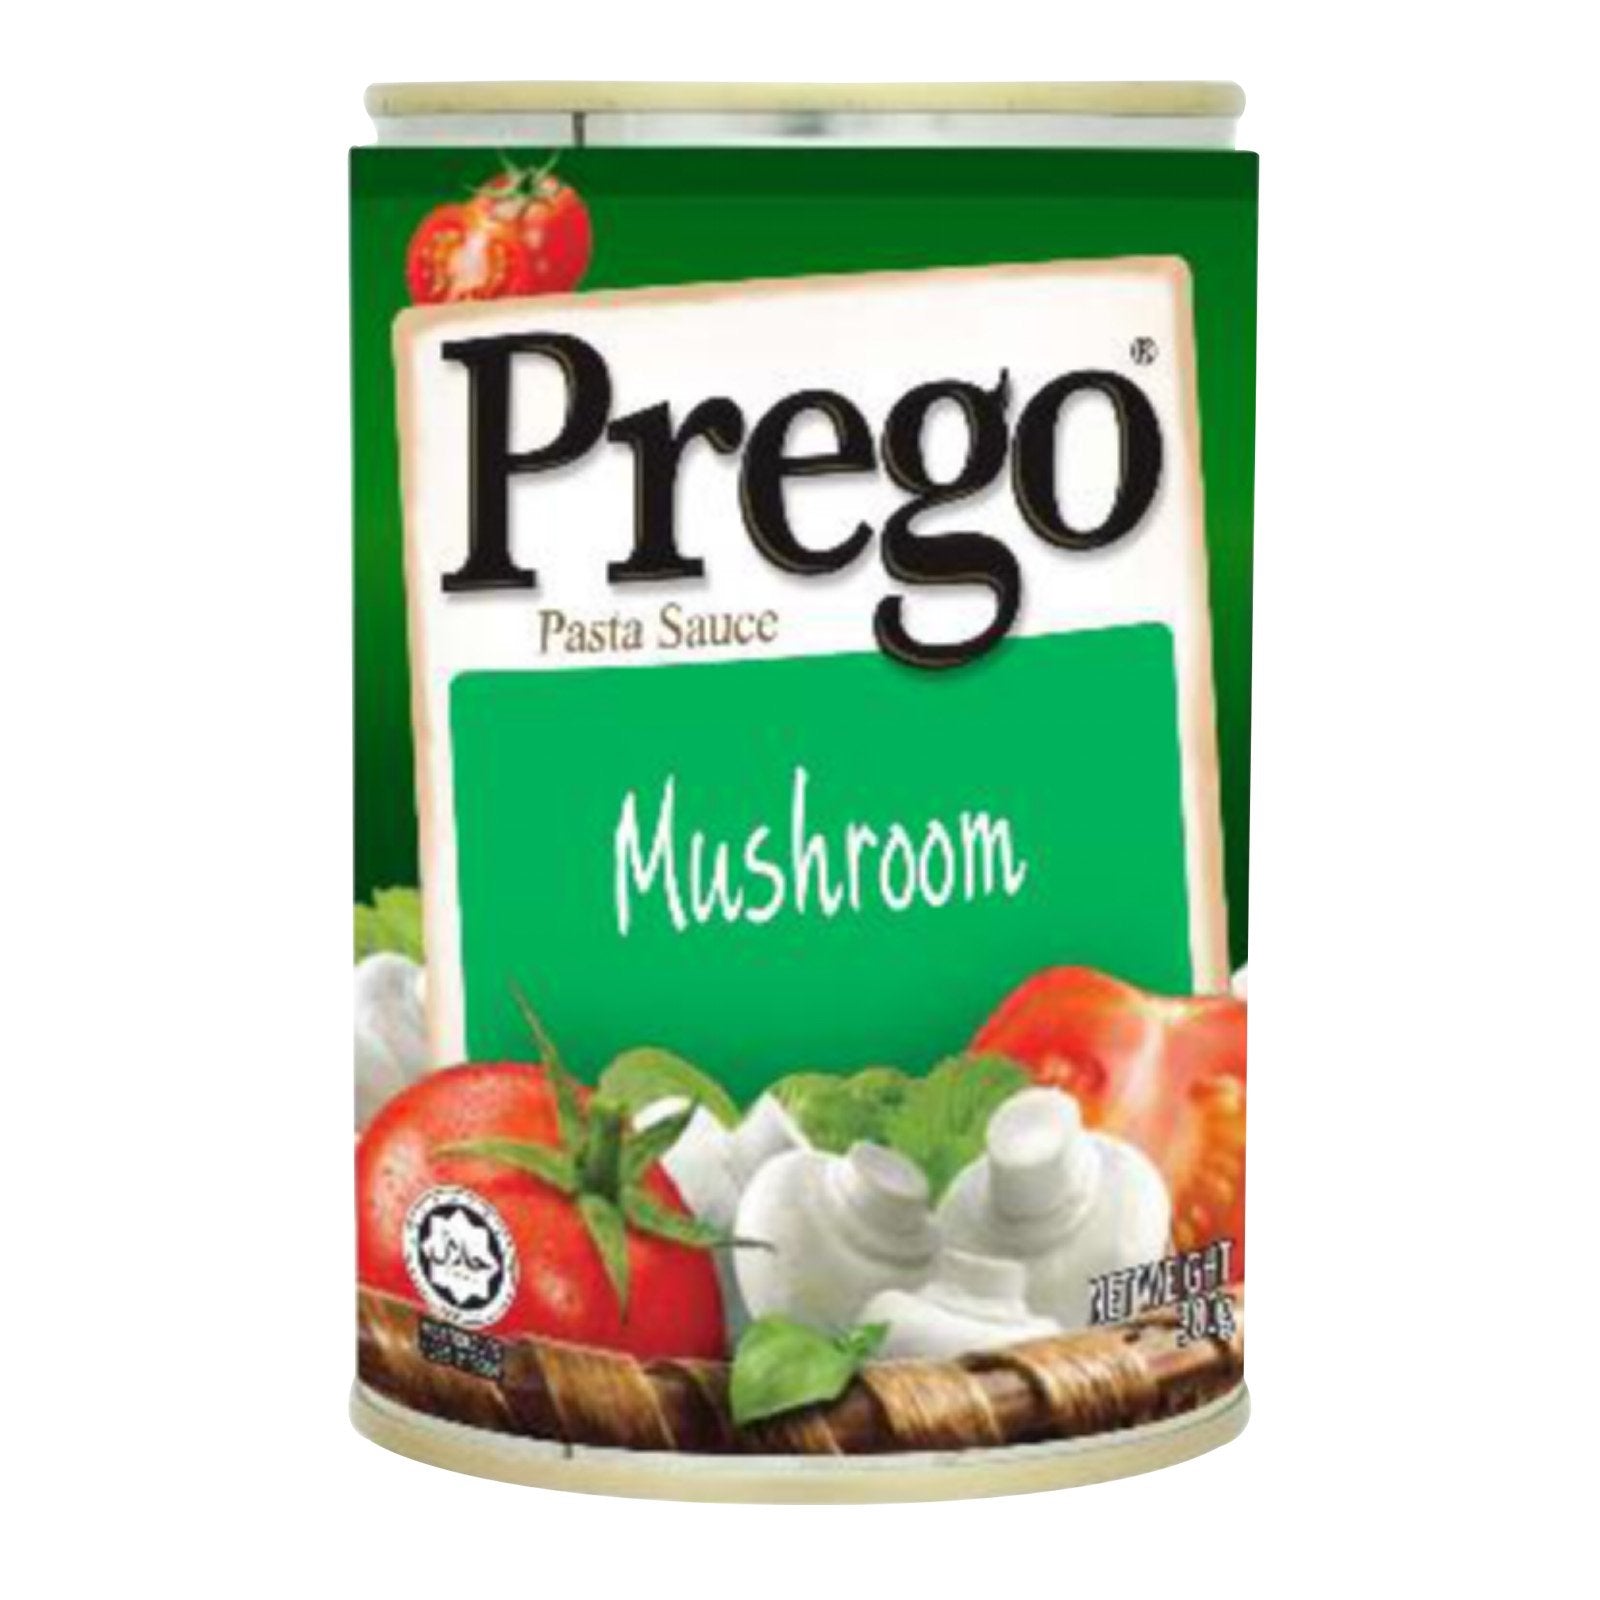 tha>Prego mushroom pasta sauce 300 gram